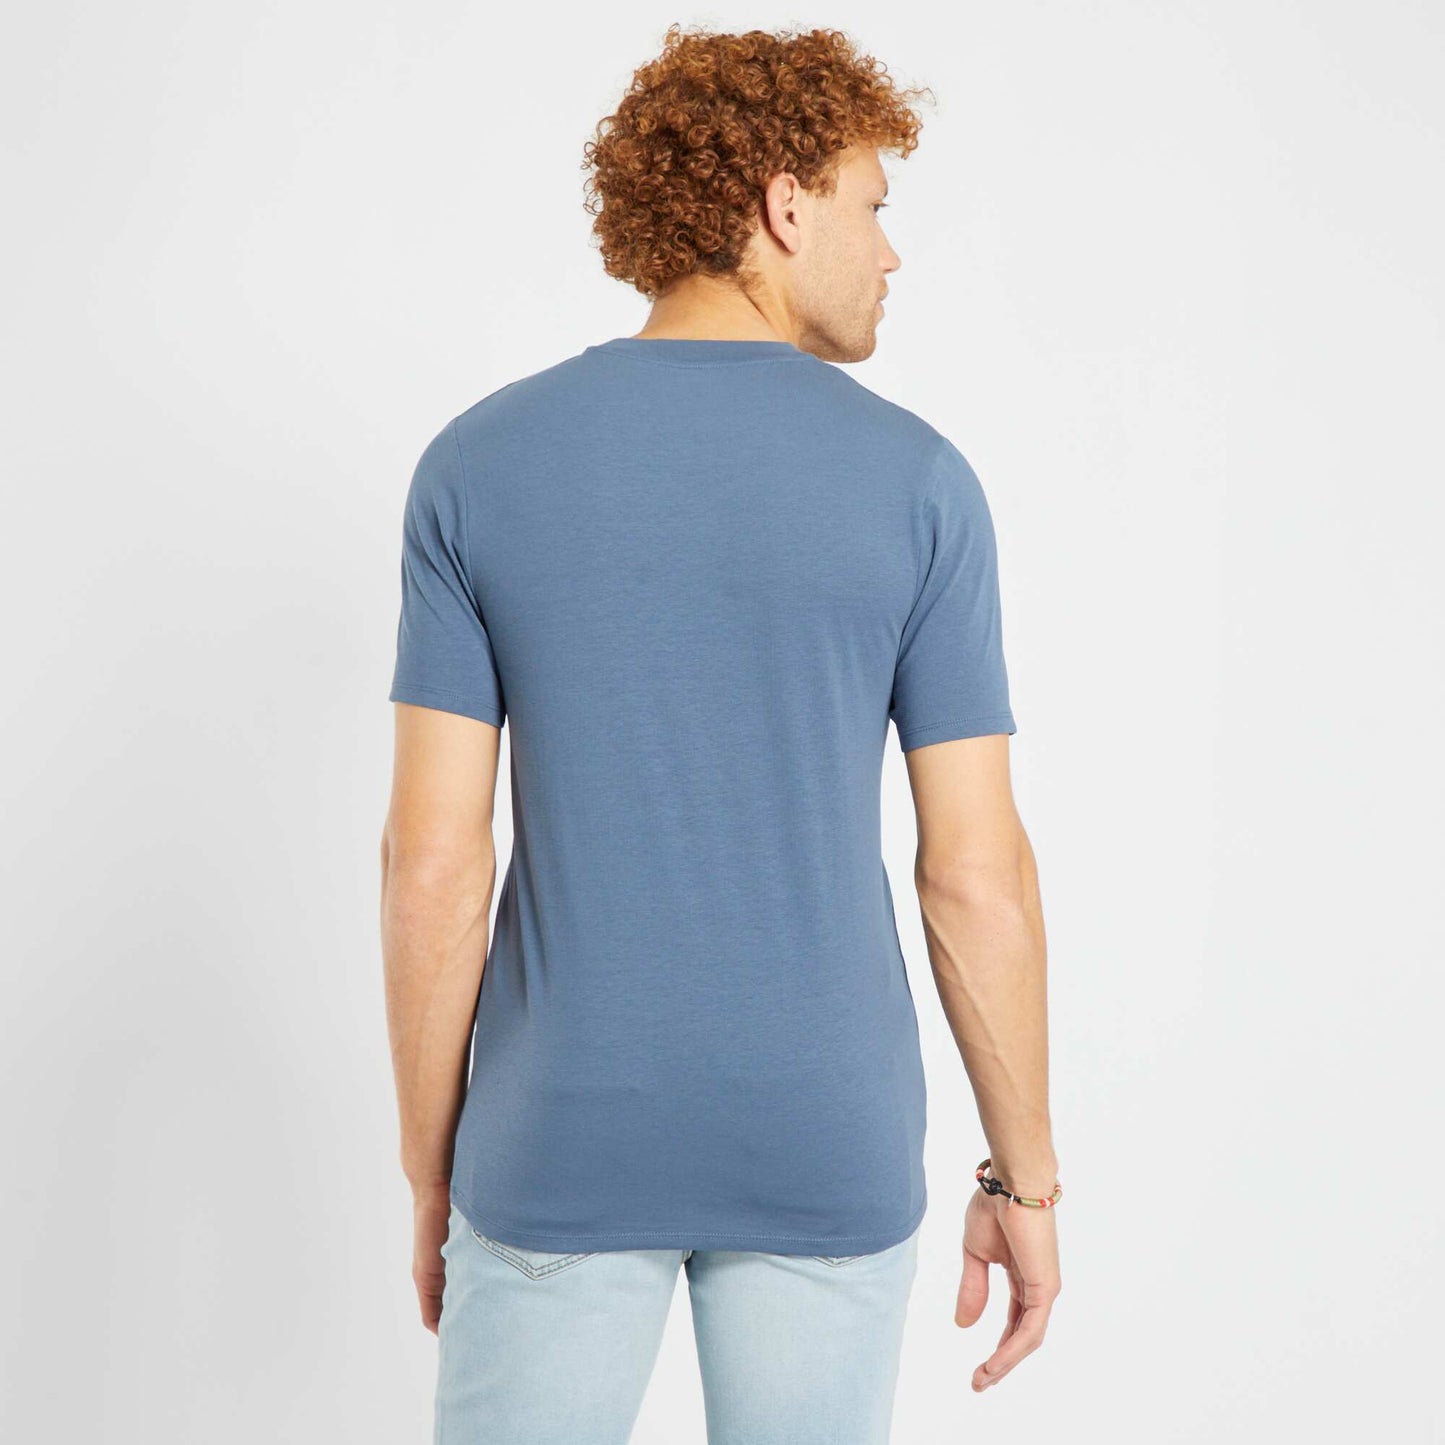 Round neck cotton T-shirt - Muscle shirt BLUE